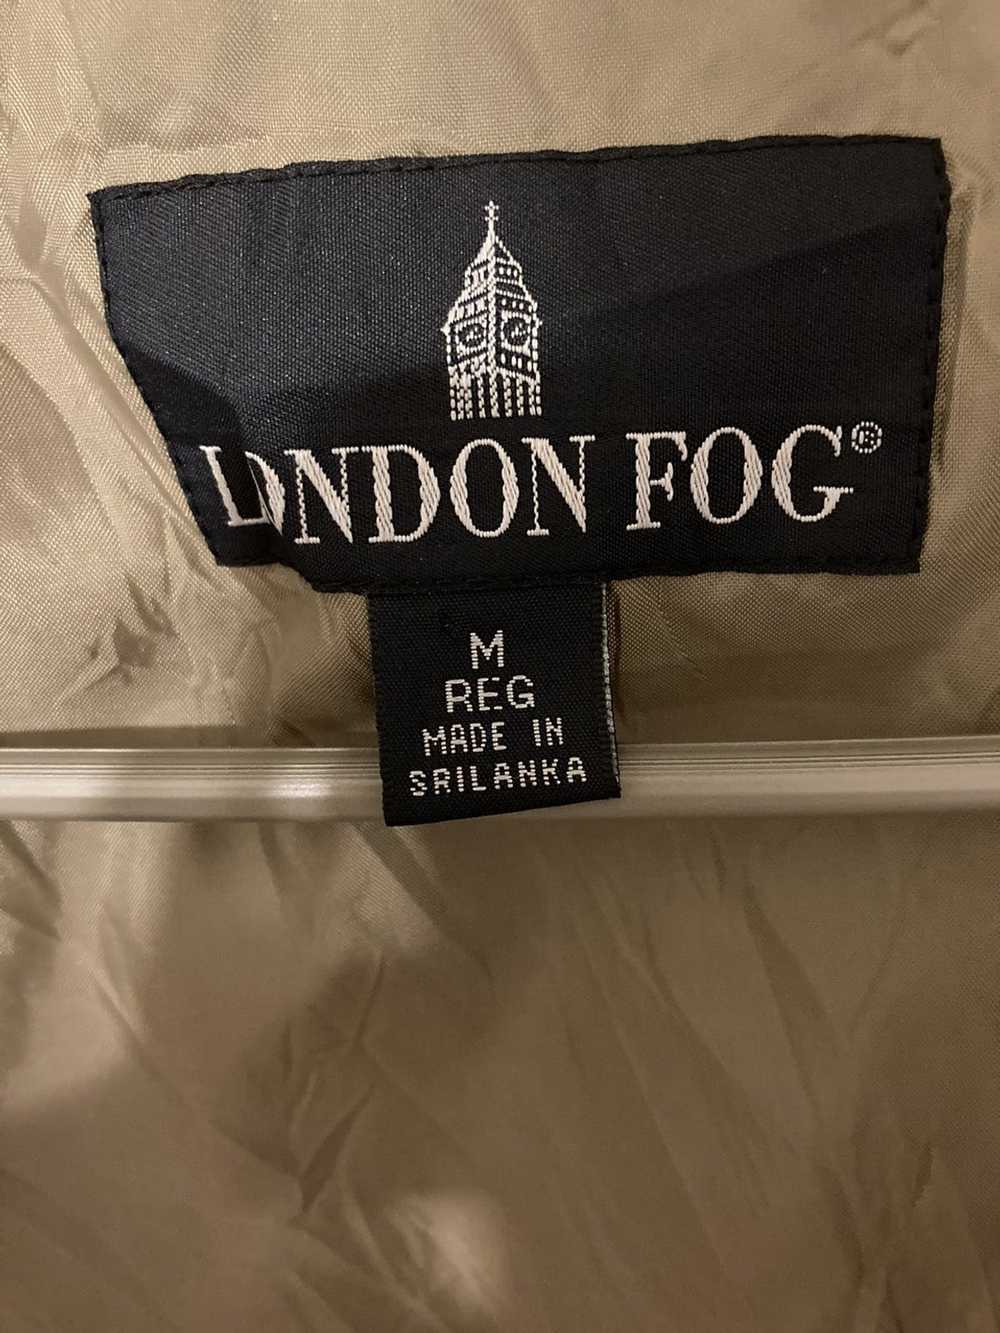 London Fog London Fog Trench Shell Jacket - image 5